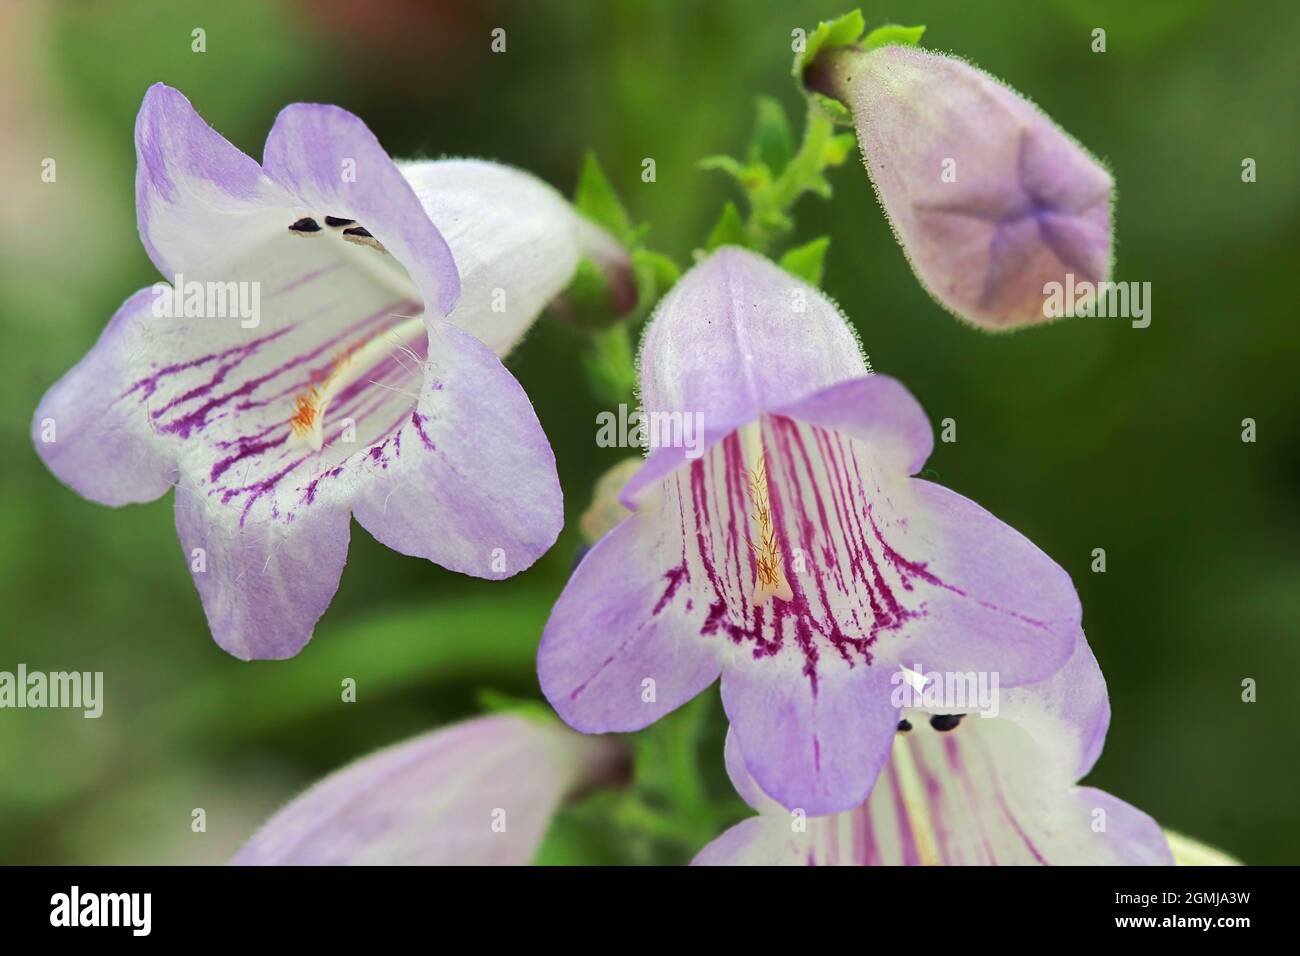 Closeup of purple and white Beard Tongue flowers Stock Photo